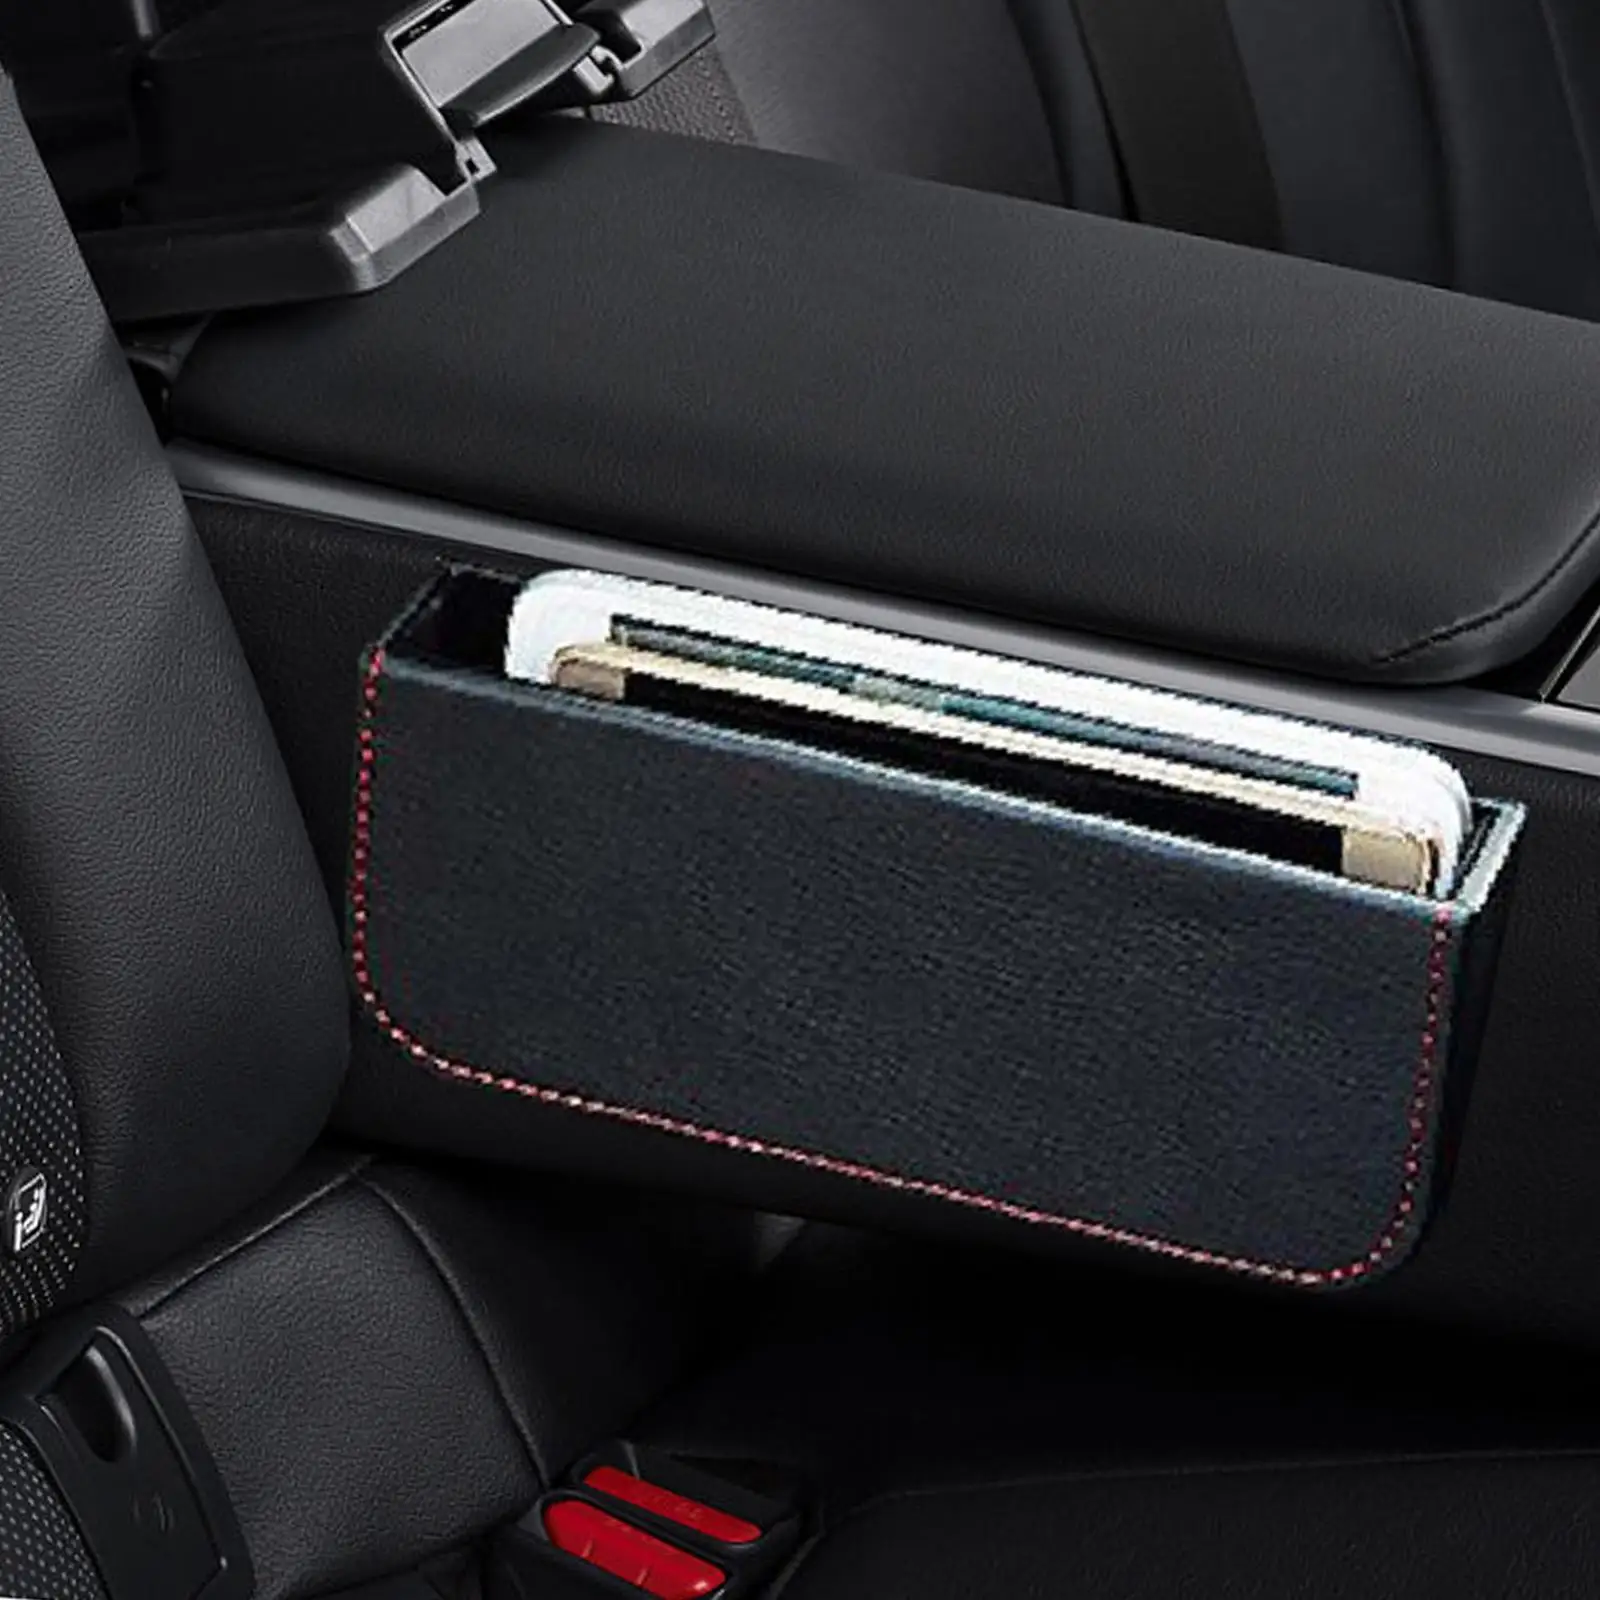 Car Storage Box Car Interior Accessories Tray for Pens Keys Phones